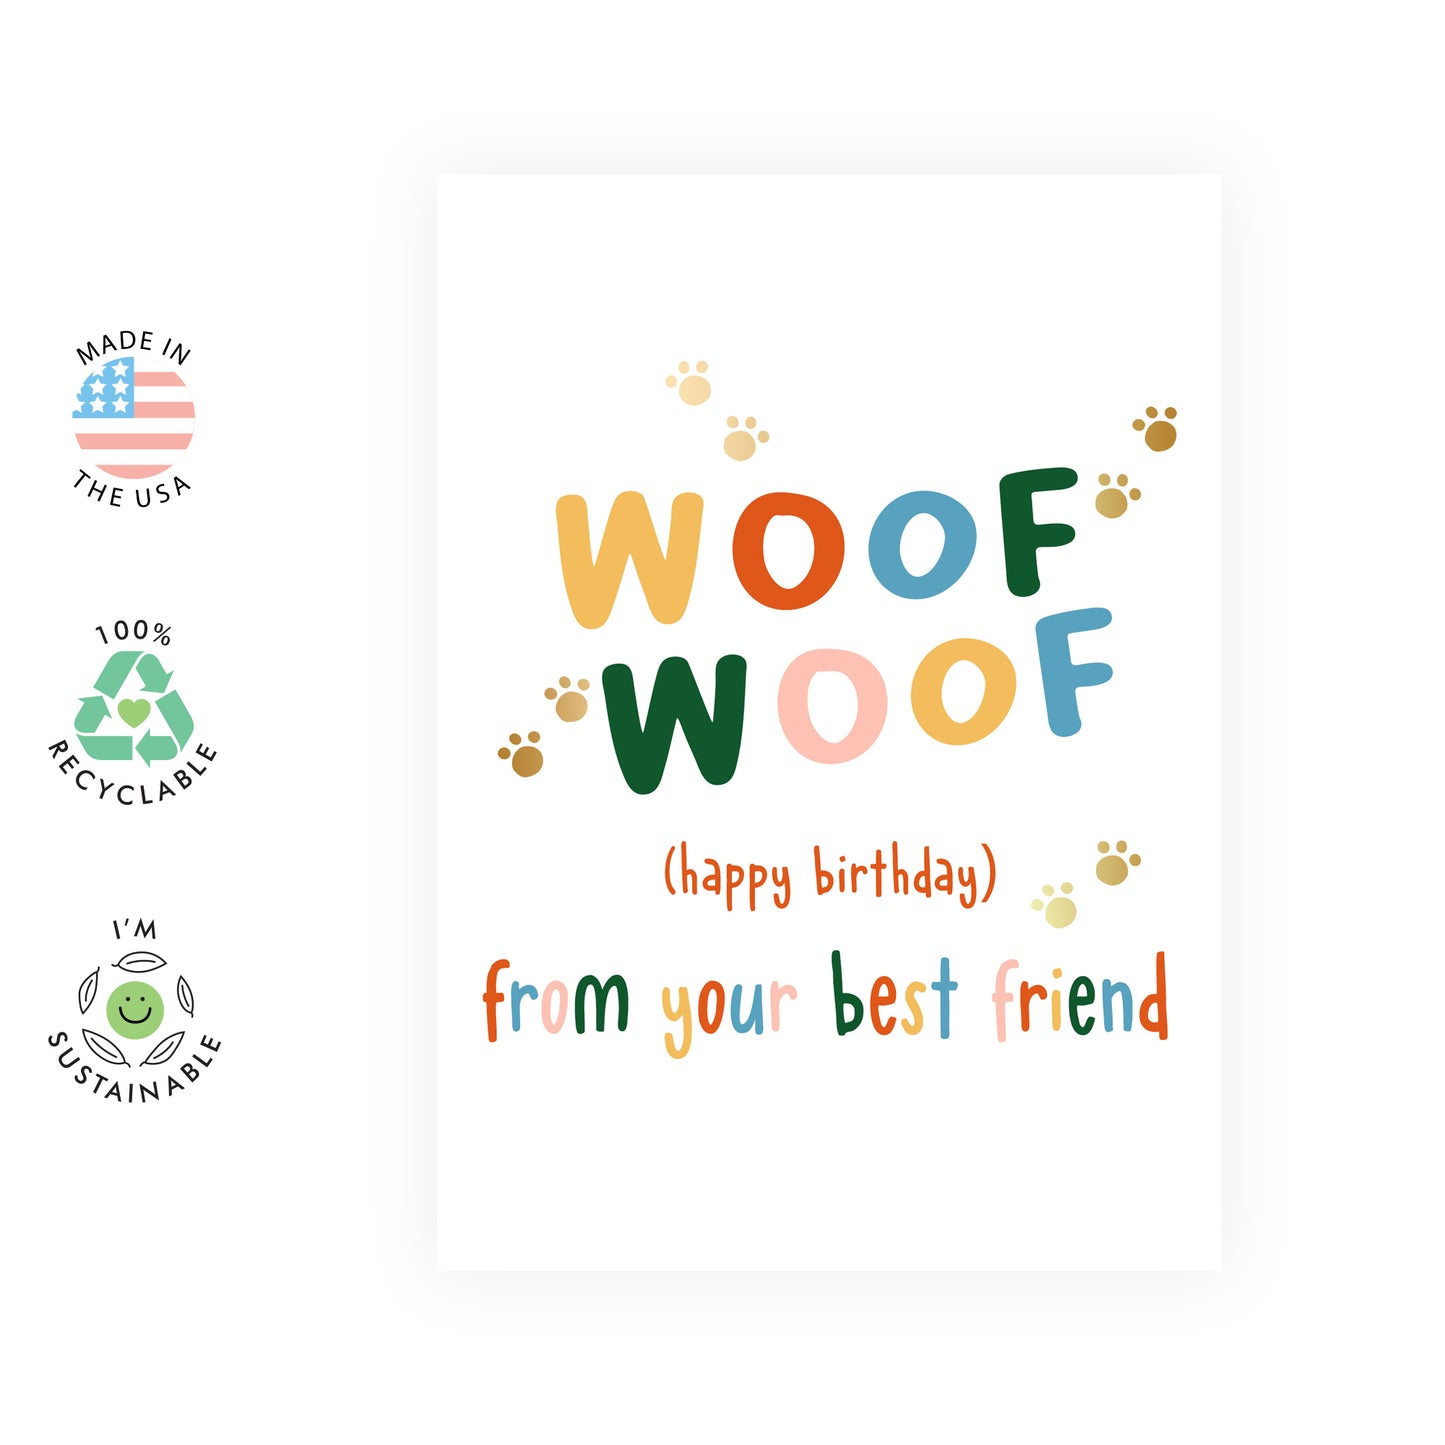 Cute Birthday Card - Woof Woof Happy Birthday - For Men Women Him Her